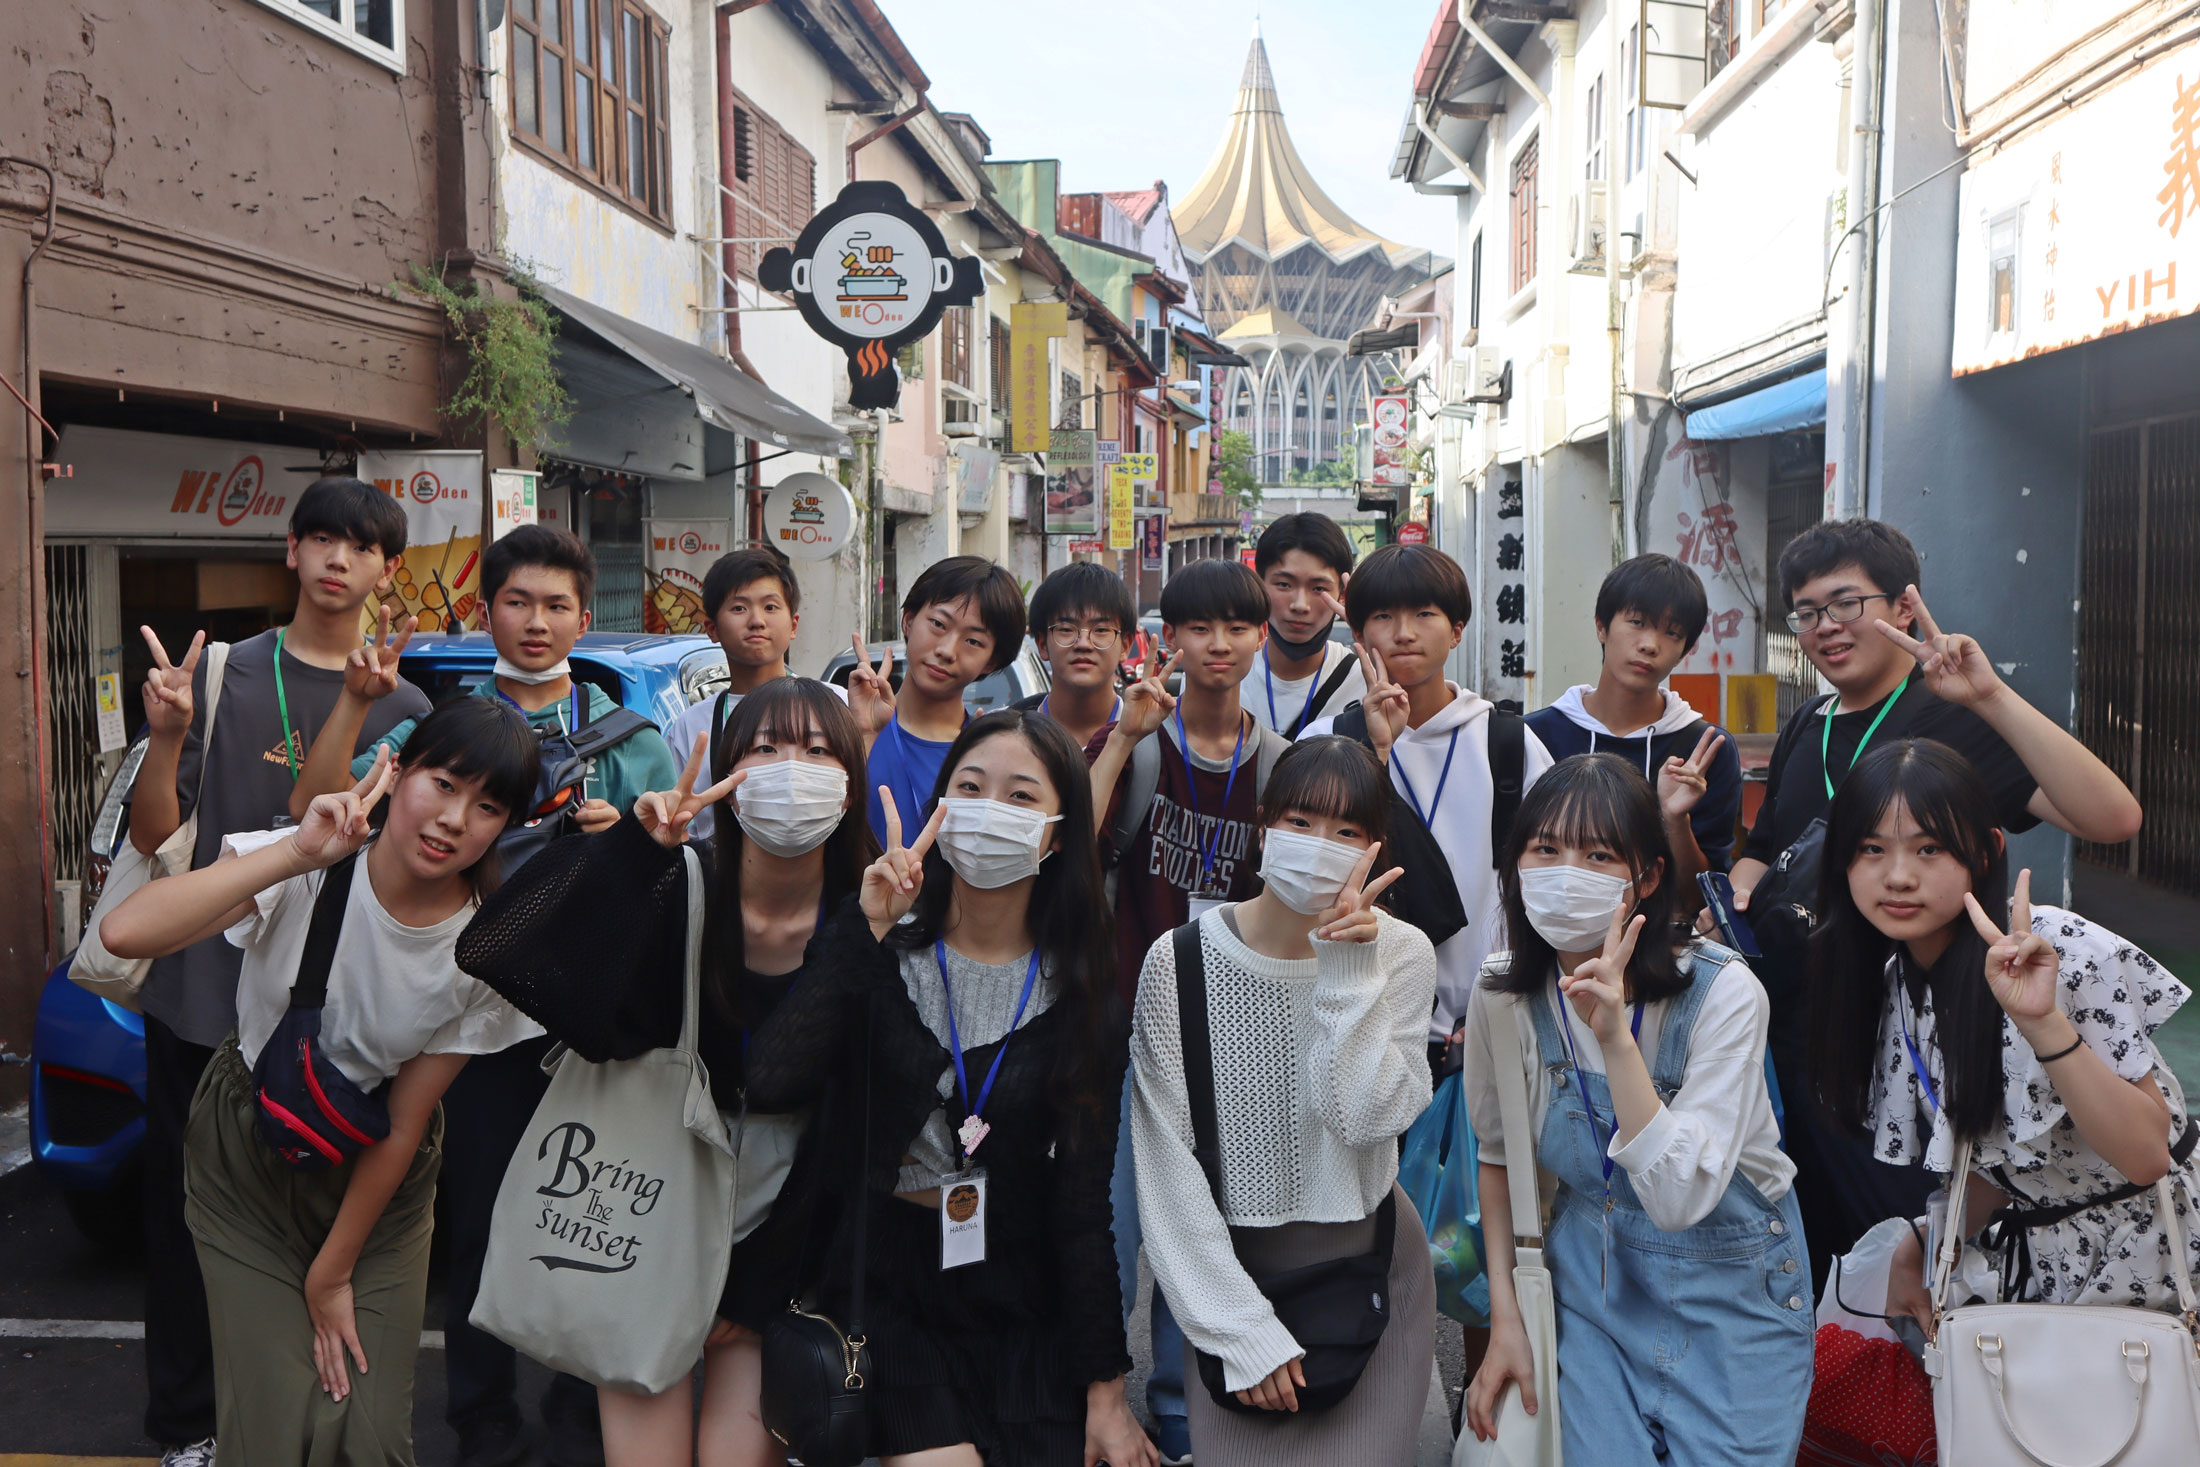 The Japanese students explore Carpenter Street.